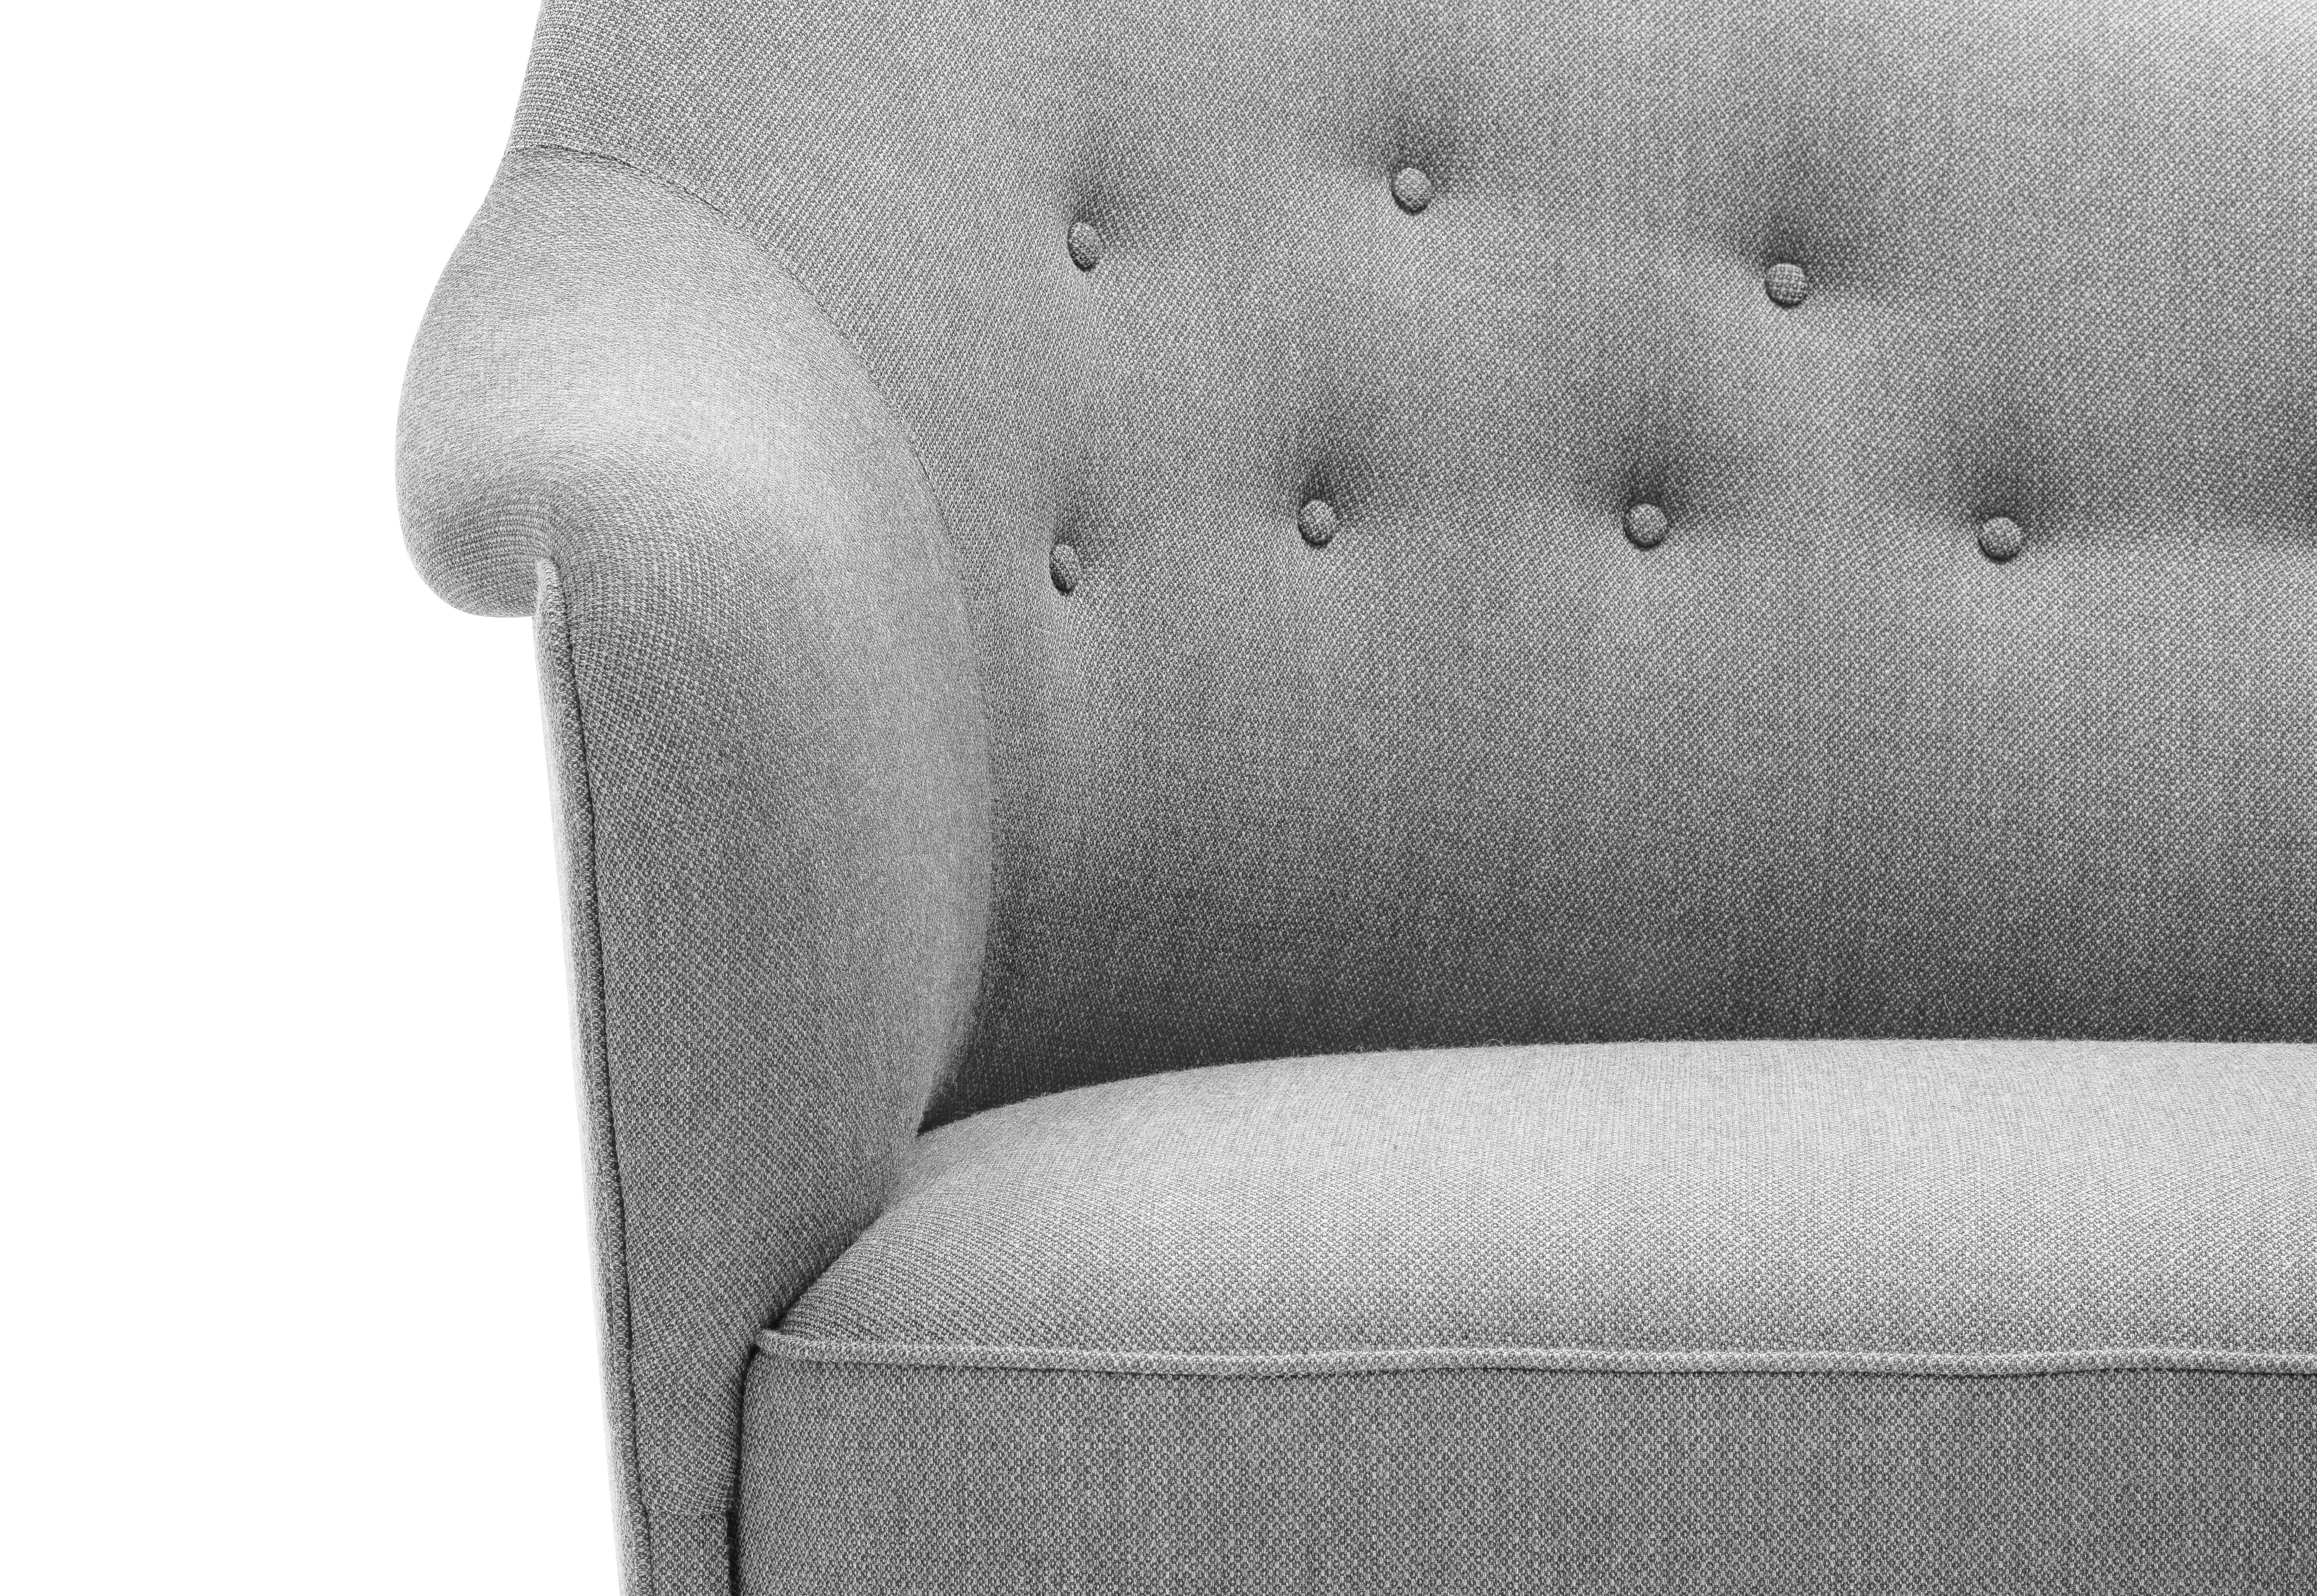 Carl Malmsten Samspel Sofa, Newly Produced, Designed in 1956 In New Condition For Sale In Tranås, SE